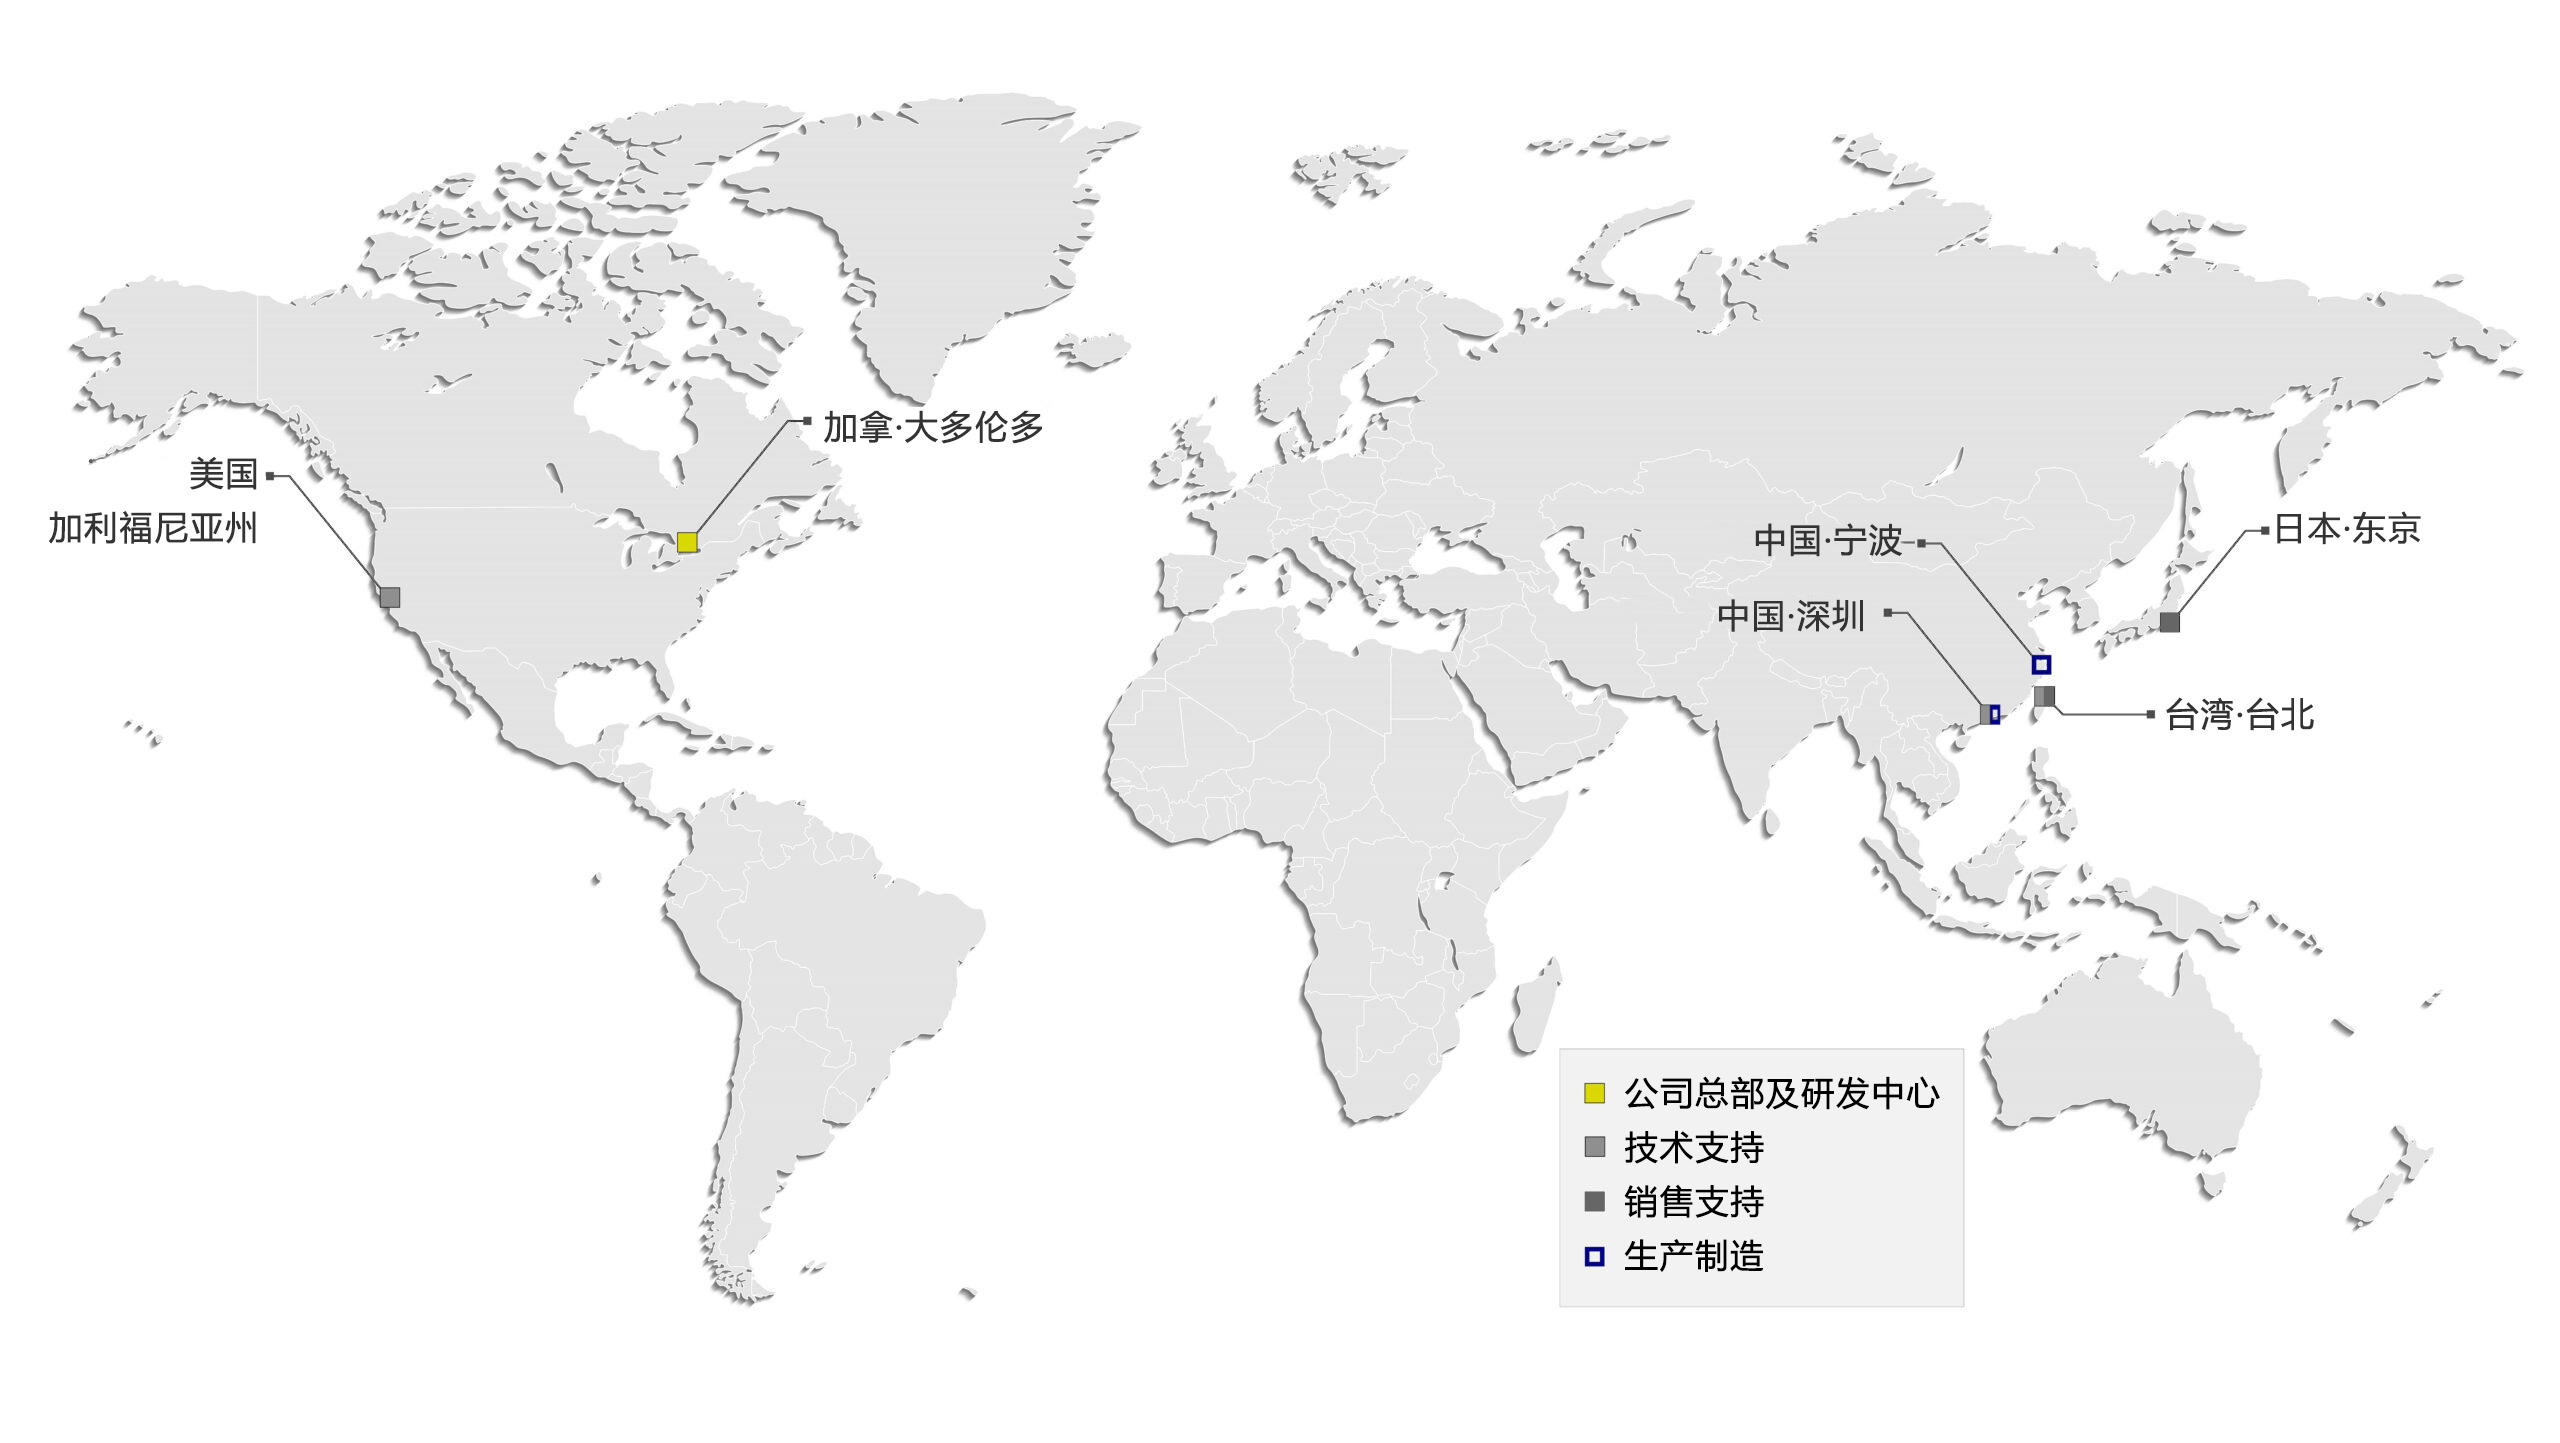 TITAN Haptics Company and Network Map